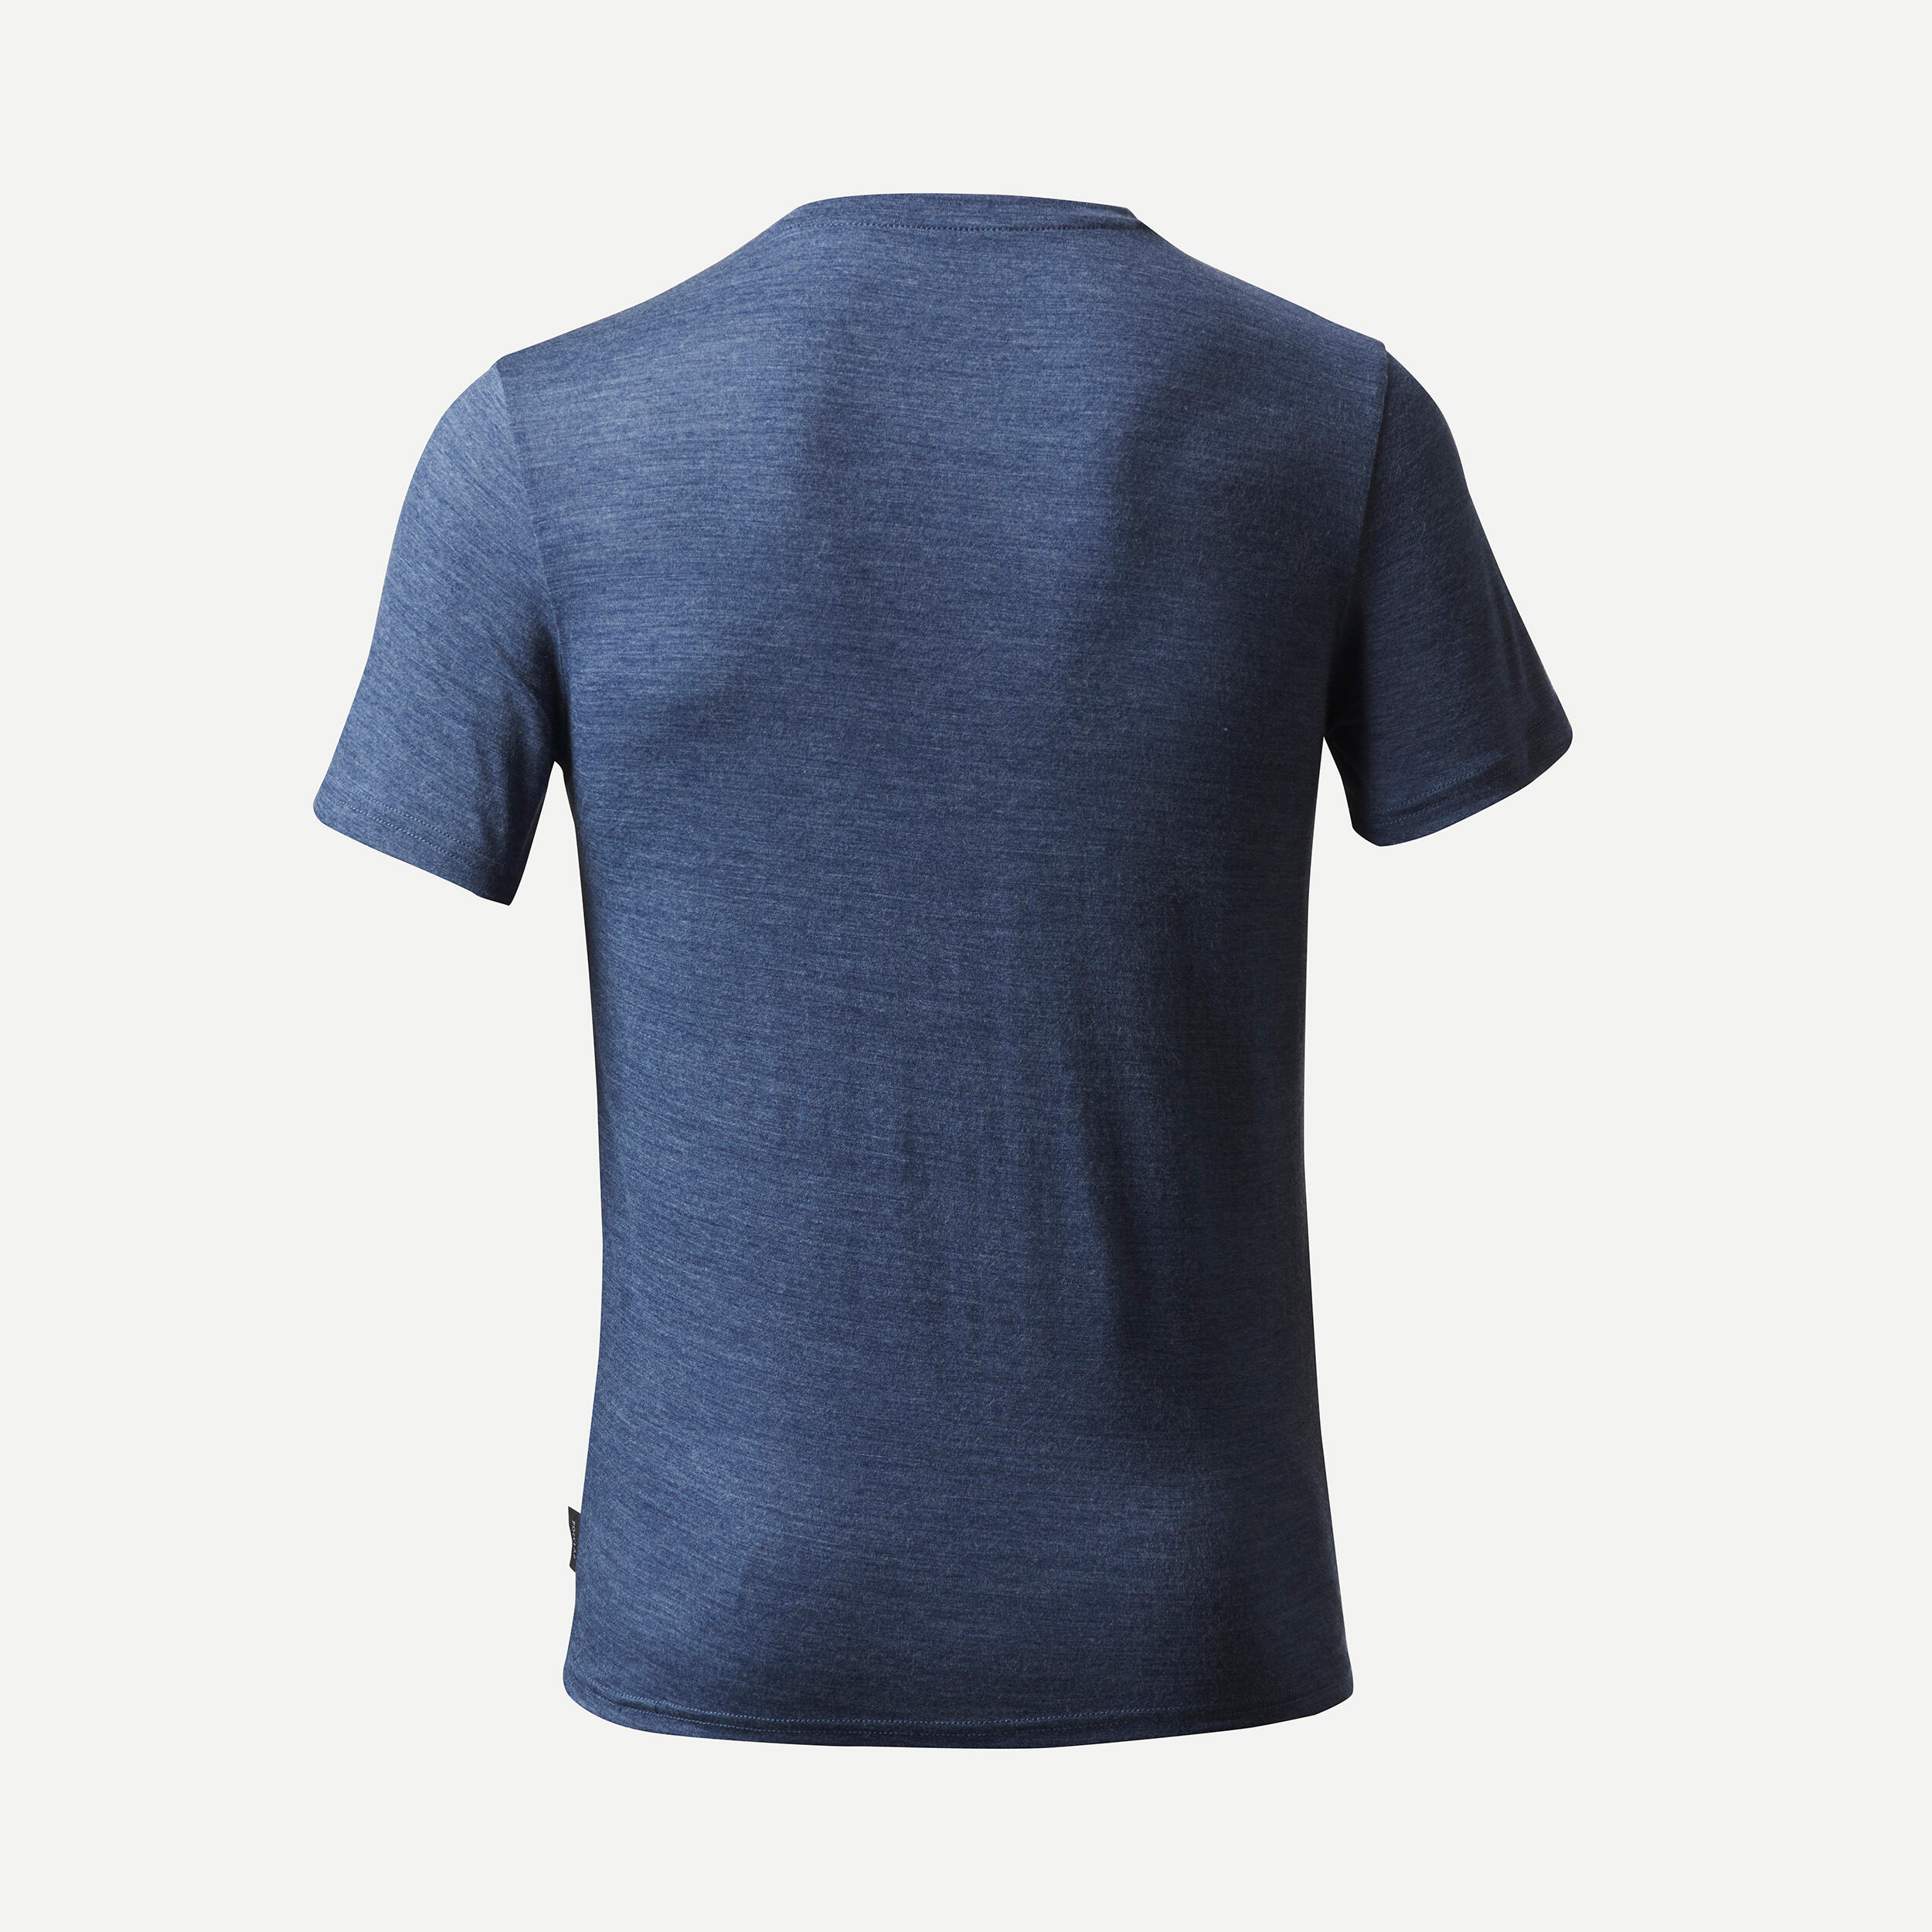 Camiseta Ivanhoe Agaton Trekk para hombre-100% lana merino-Verde